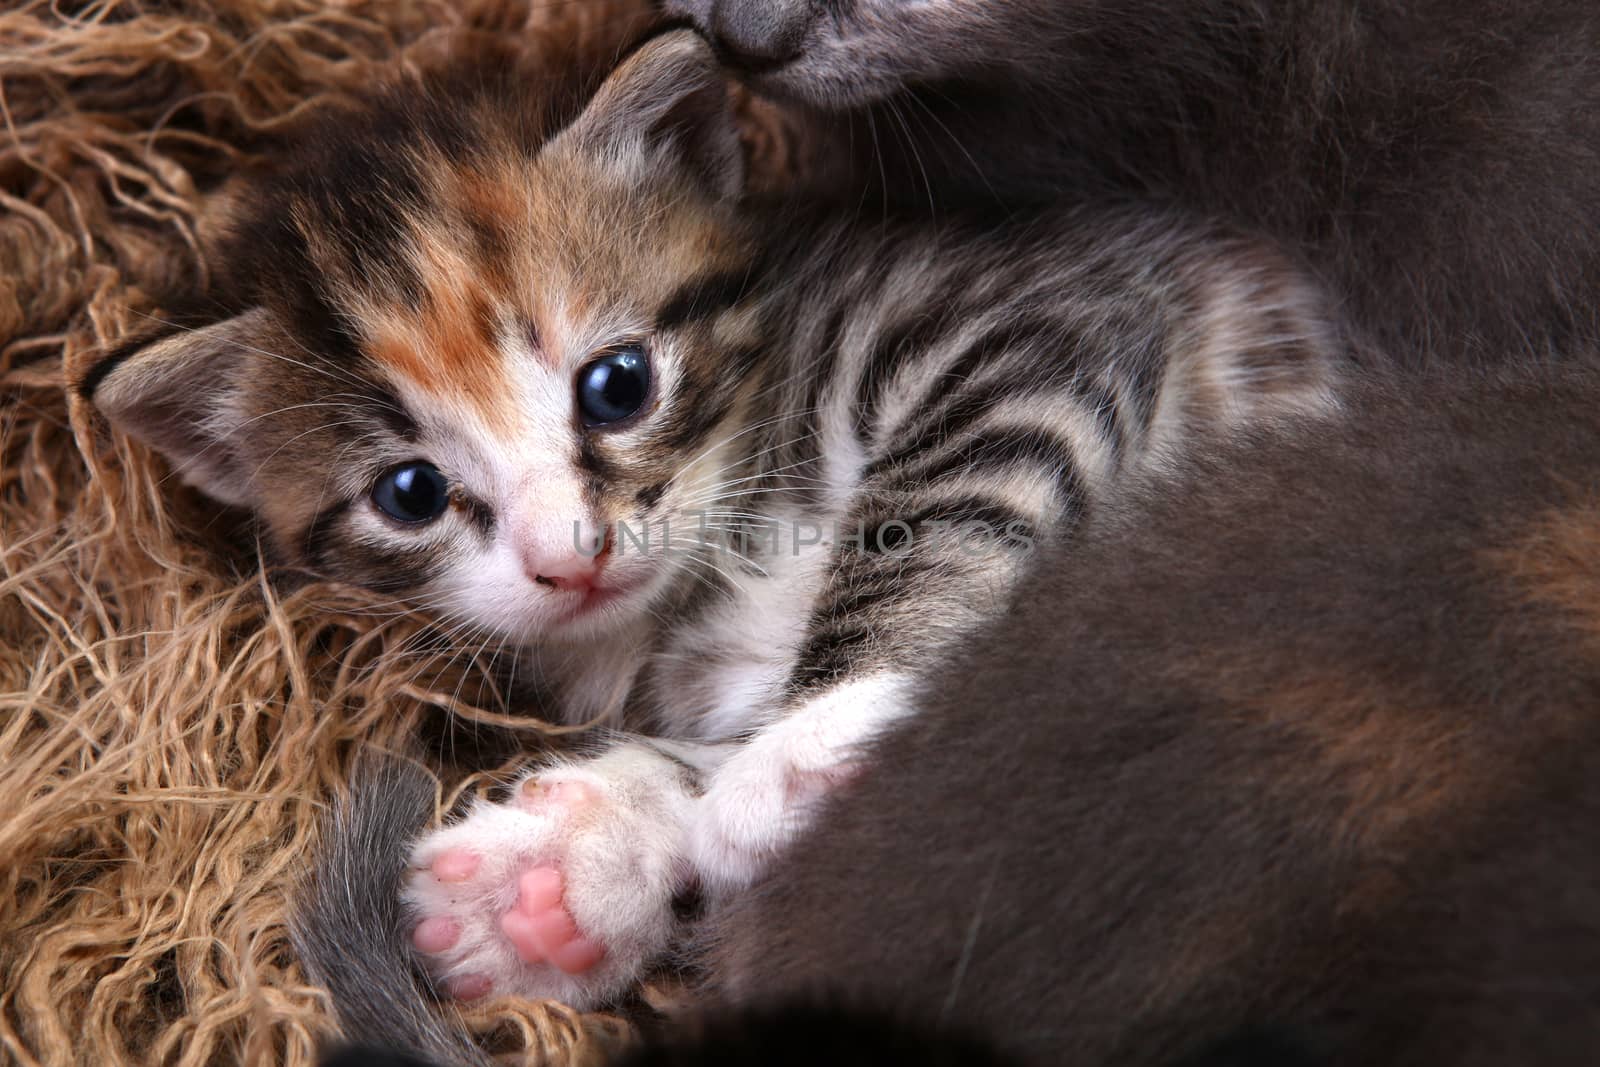 Cute Baby Kitten Lying in a Basket With Siblings